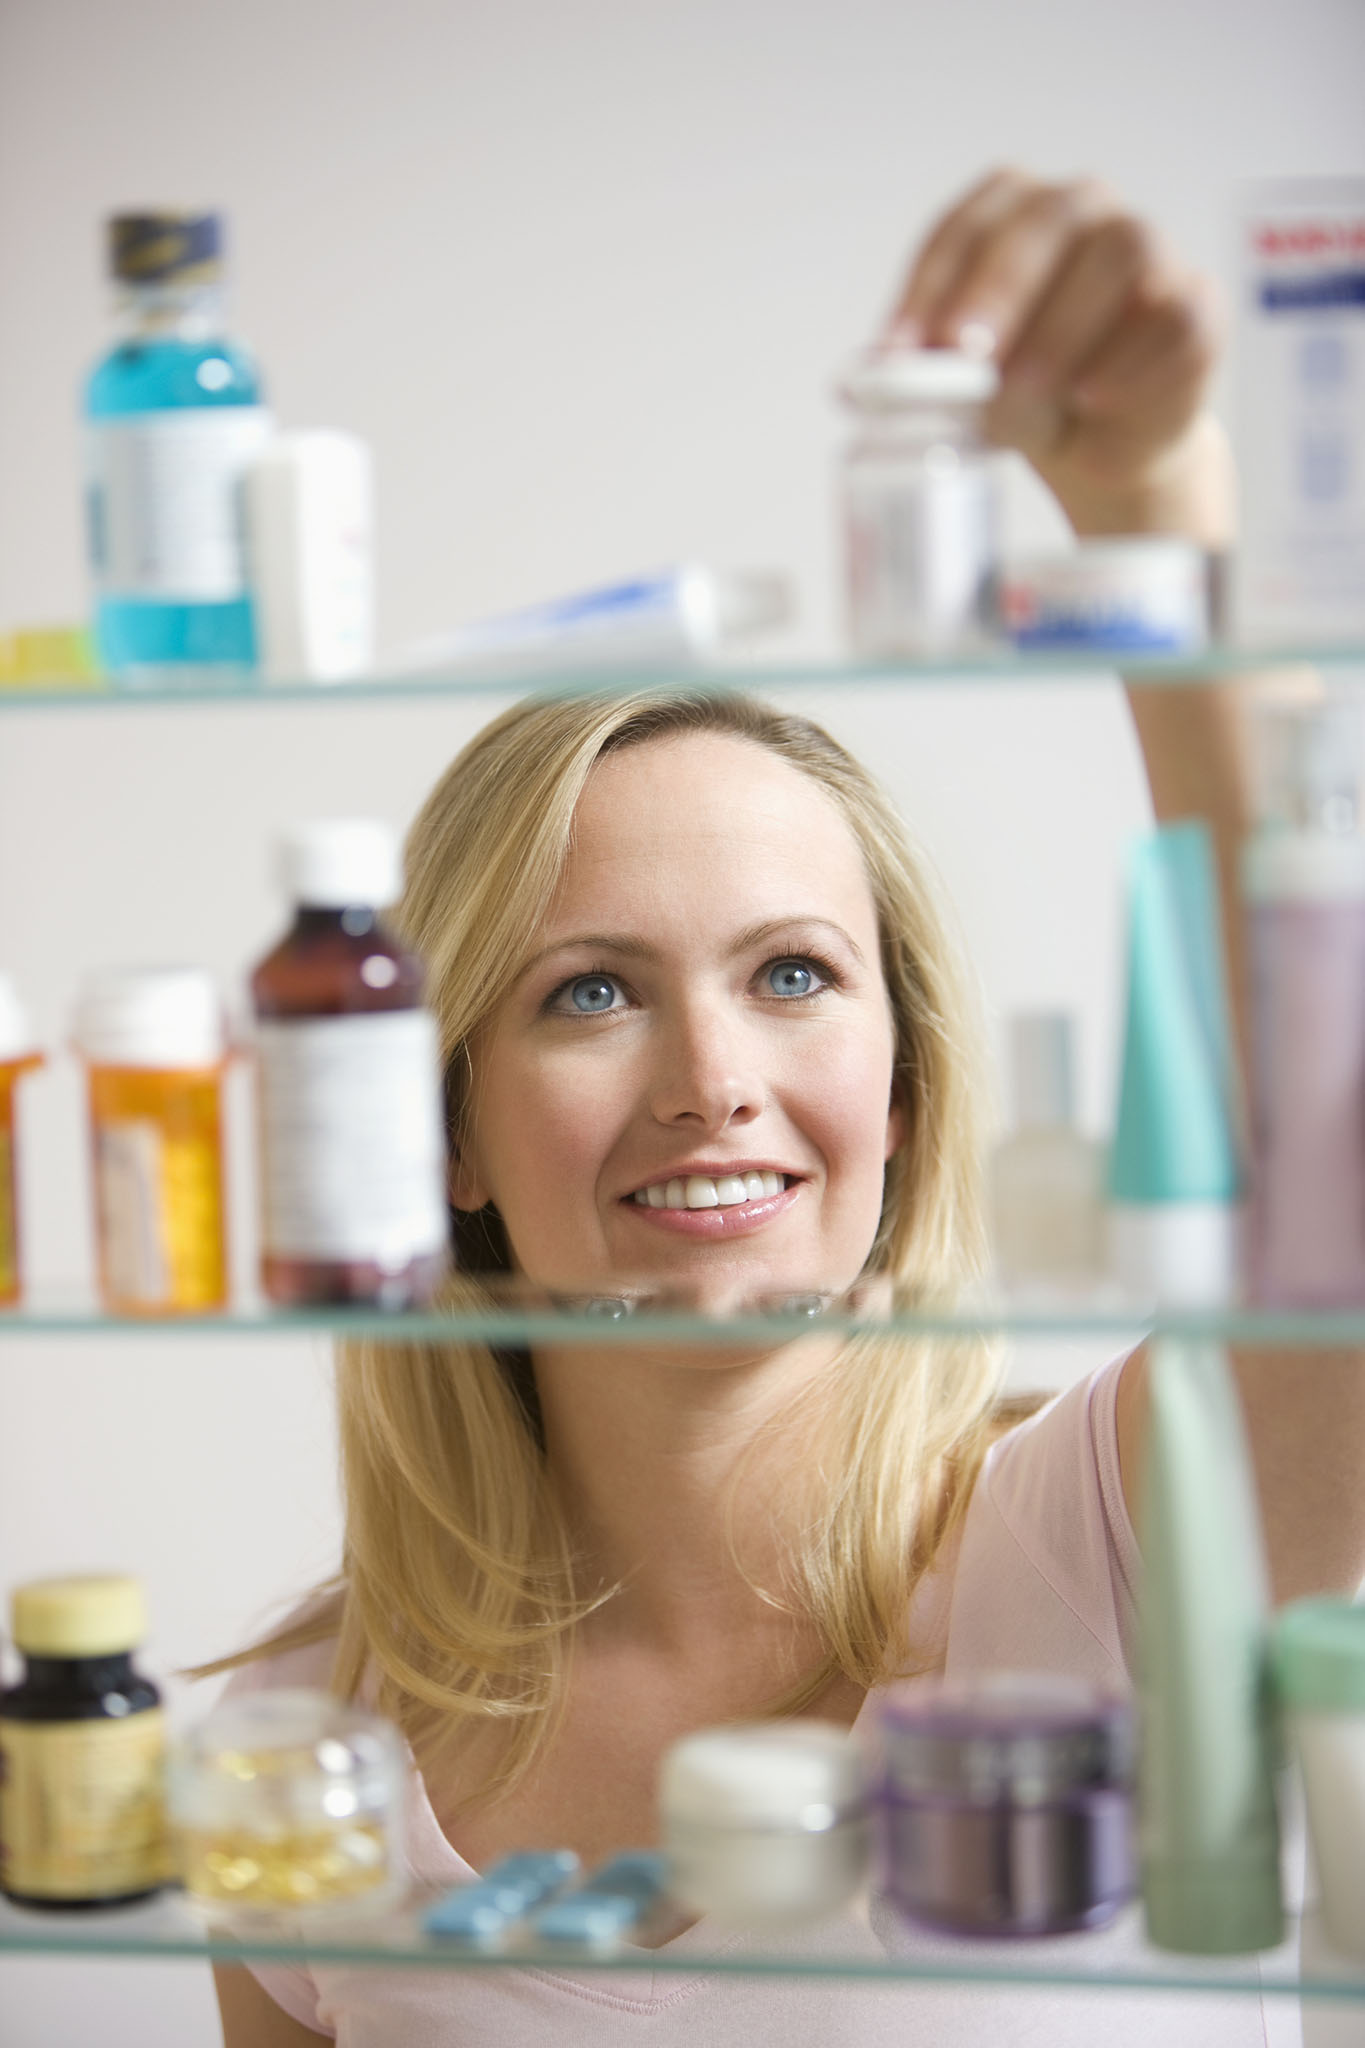 Smiling woman placing medicine on shelves